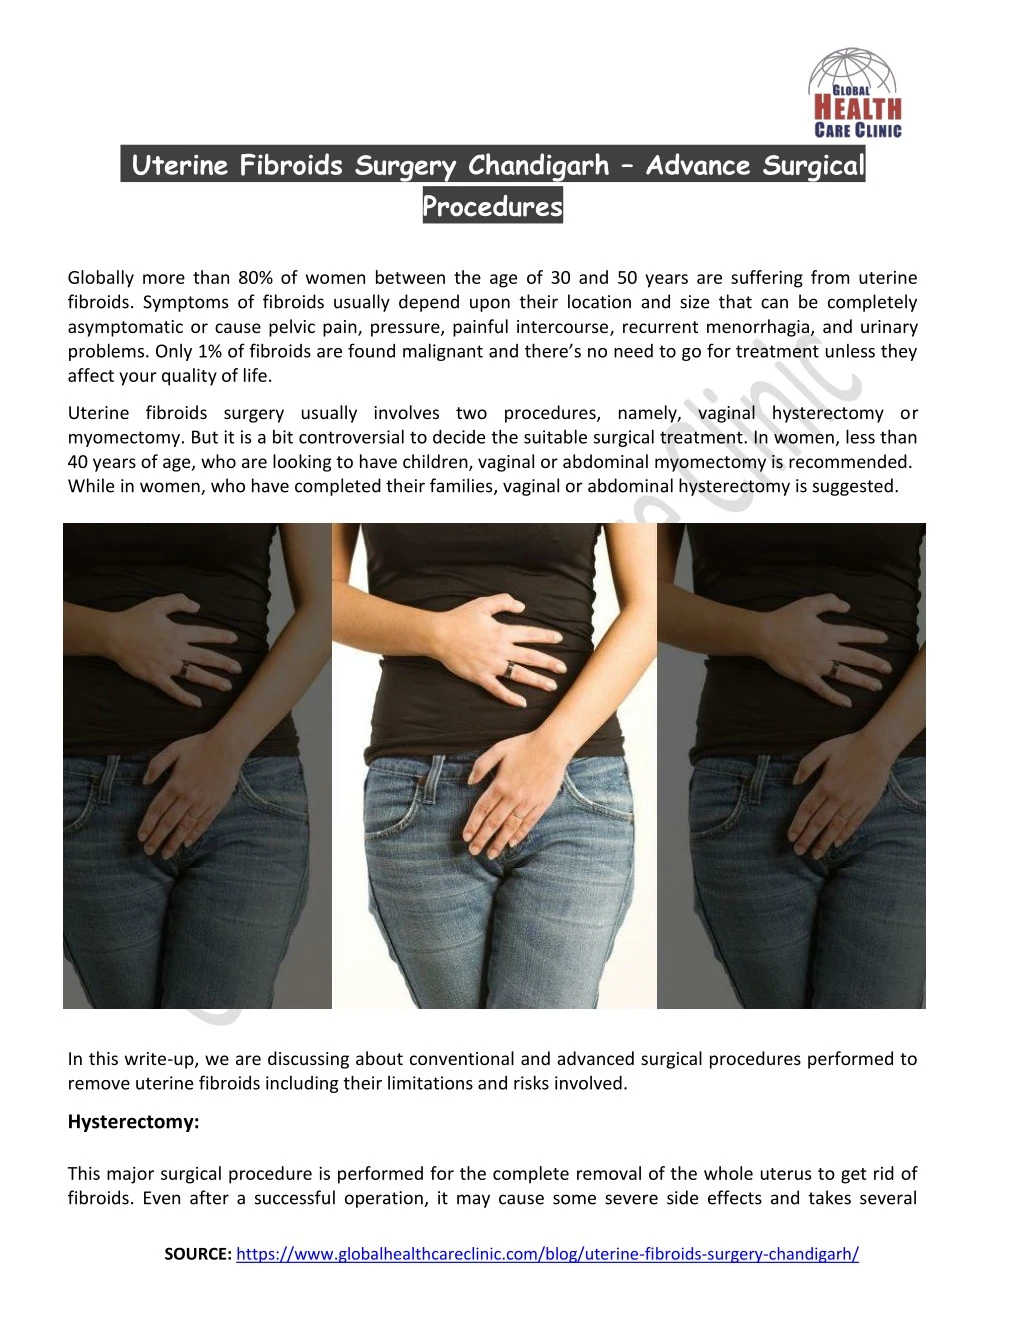 uterine fibroids surgery chandigarh advance